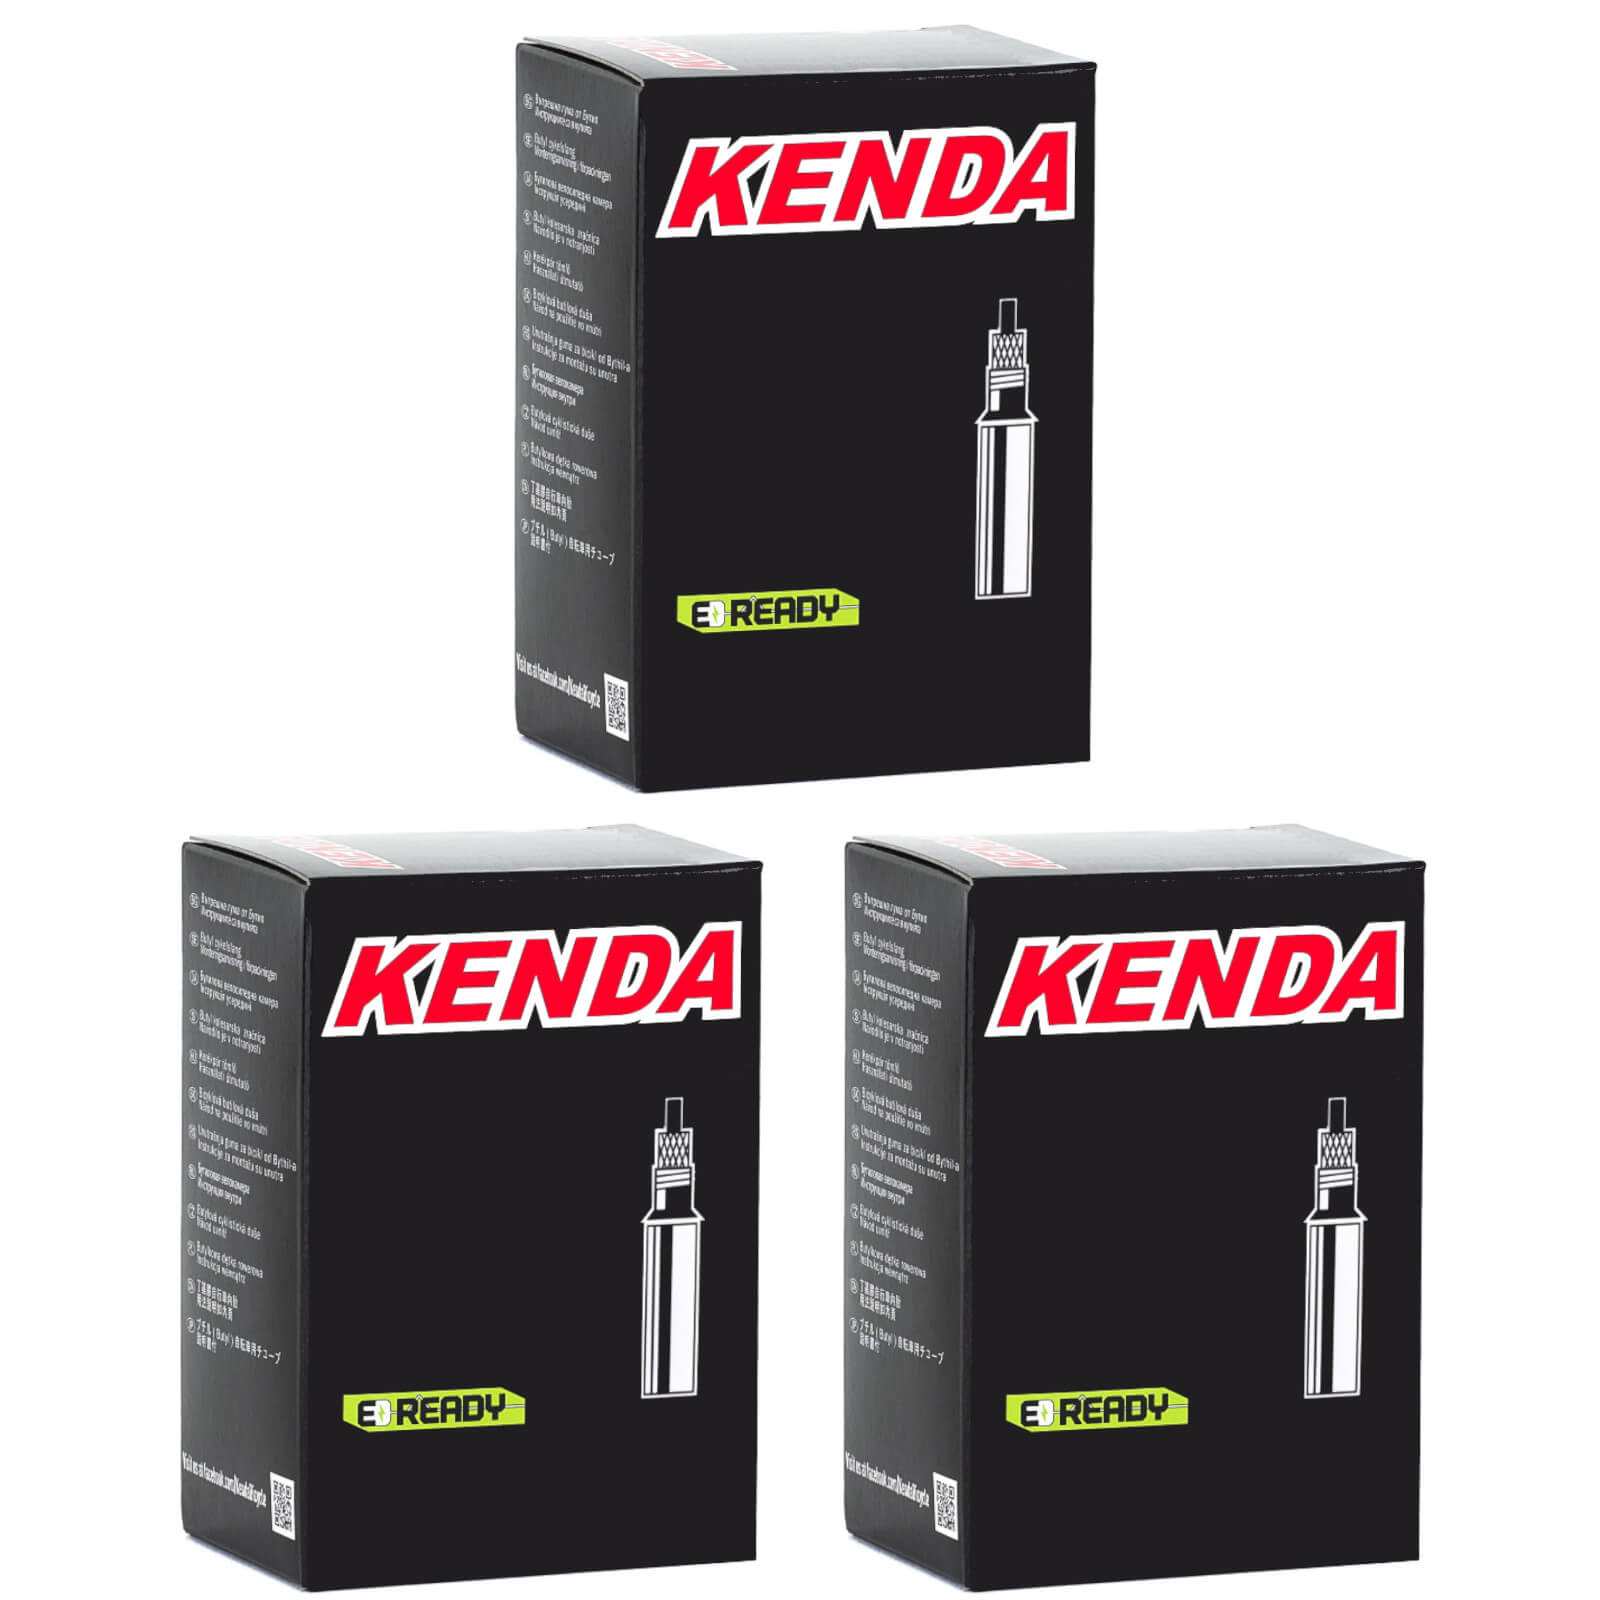 Kenda 27.5x2.8-3.0" Removable Core 27.5 Inch Presta Valve Bike Inner Tube Pack of 3